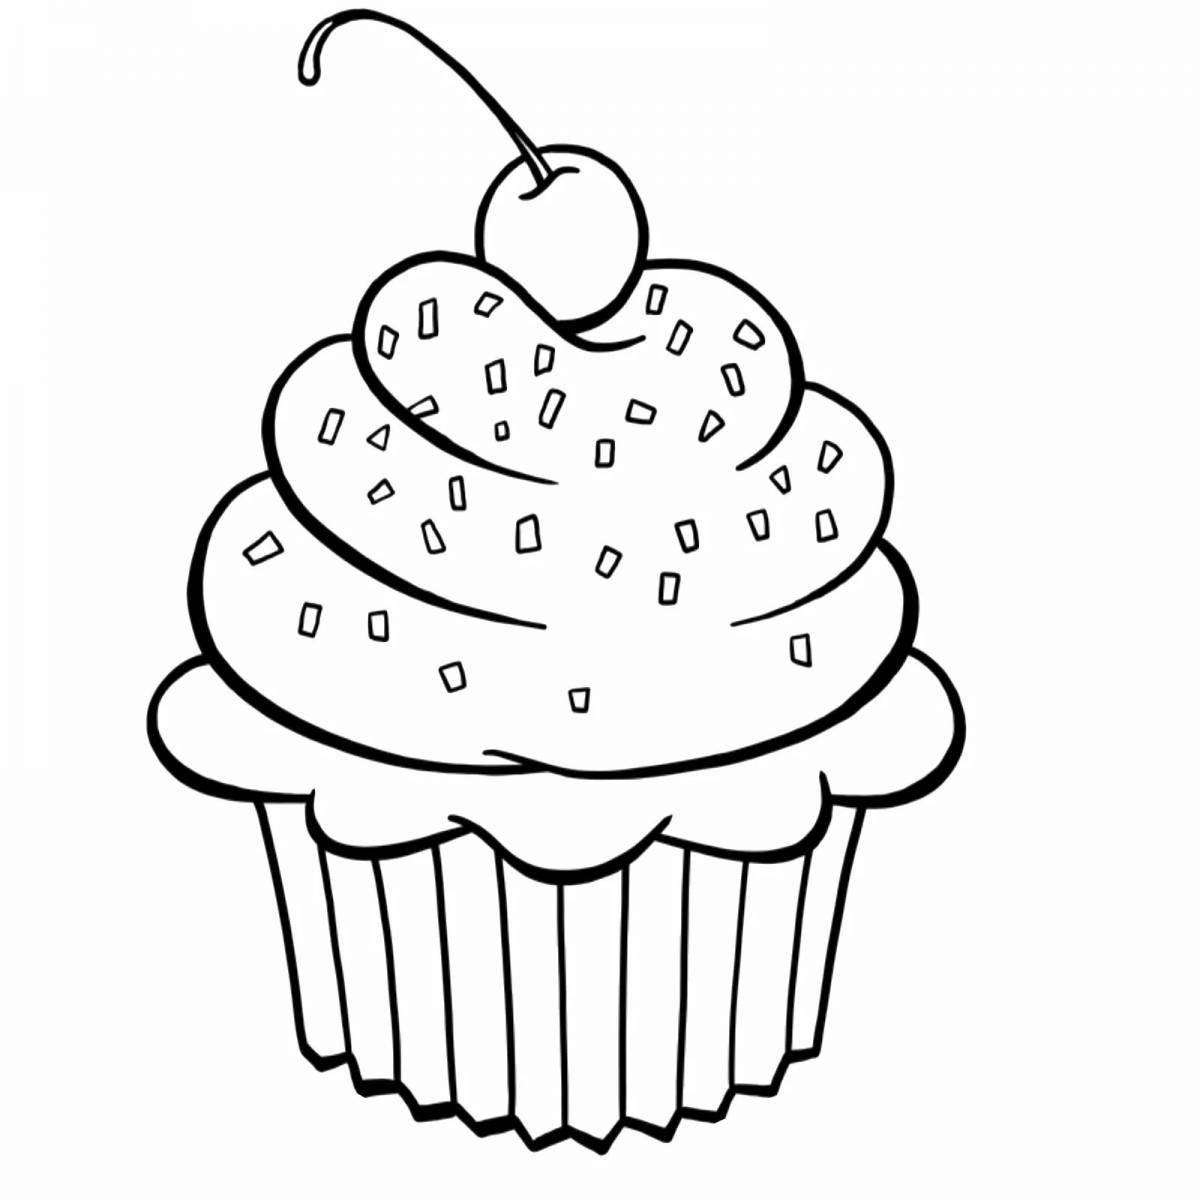 Children's cupcake coloring book